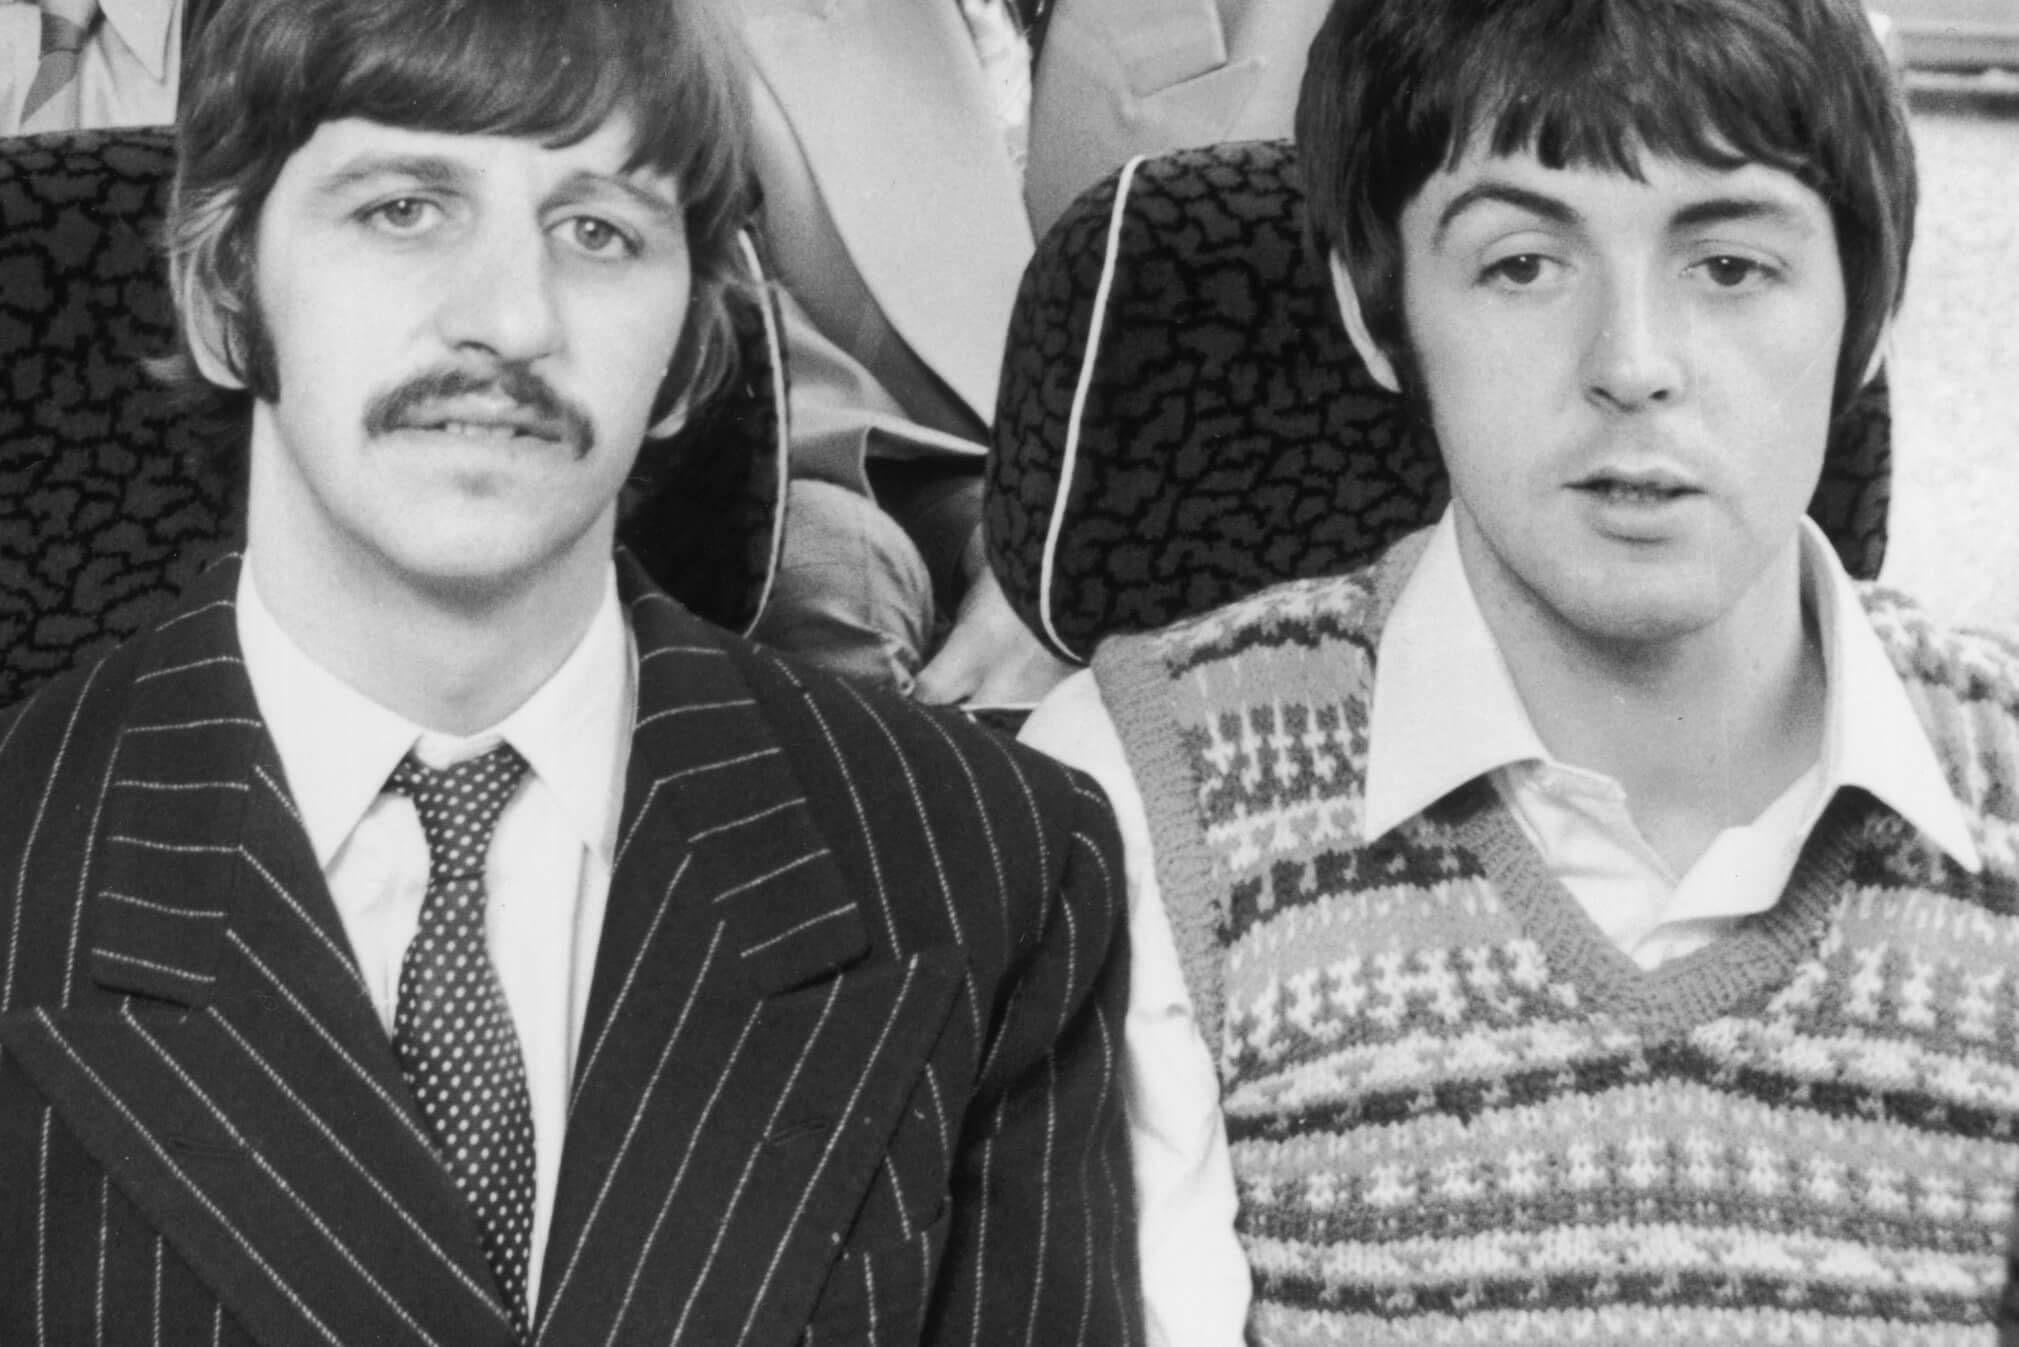 Ringo Starr and Paul McCartney on The Beatles' 'Magical Mystery Tour' bus